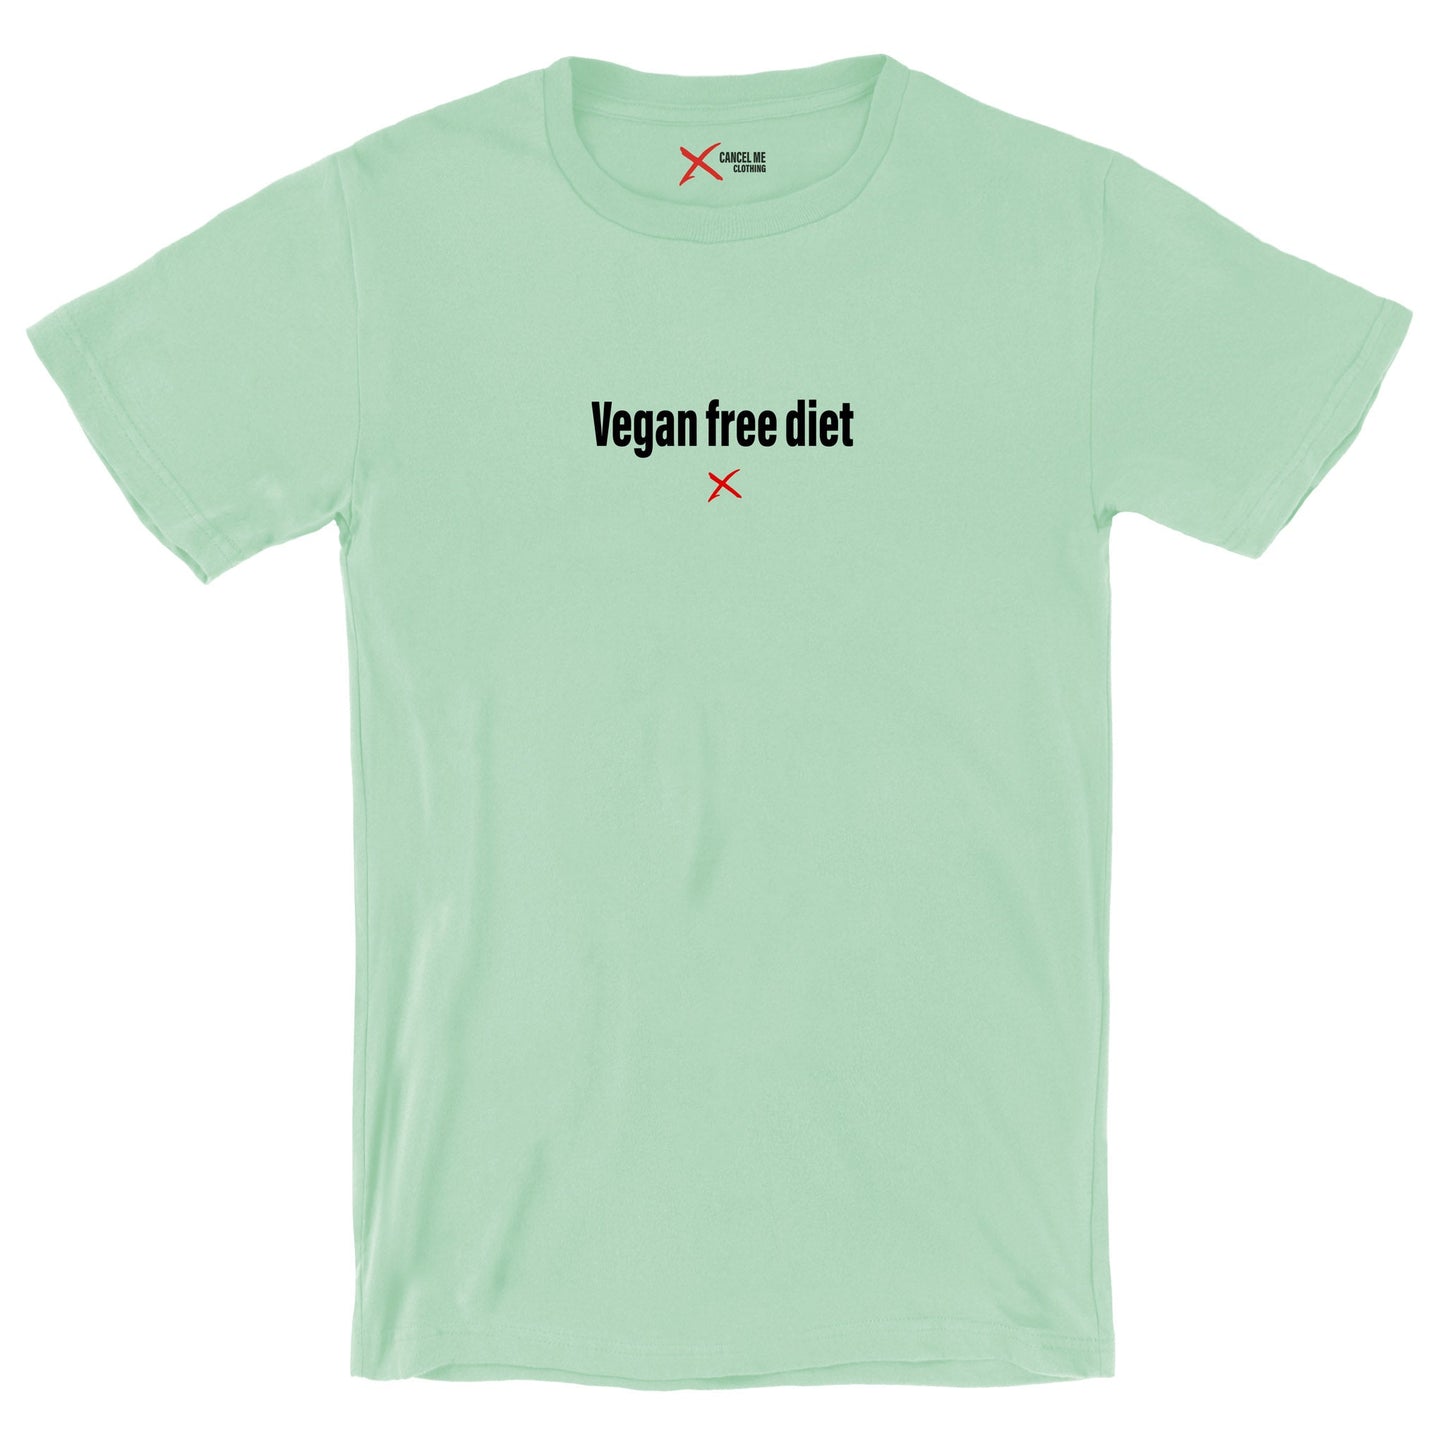 Vegan free diet - Shirt